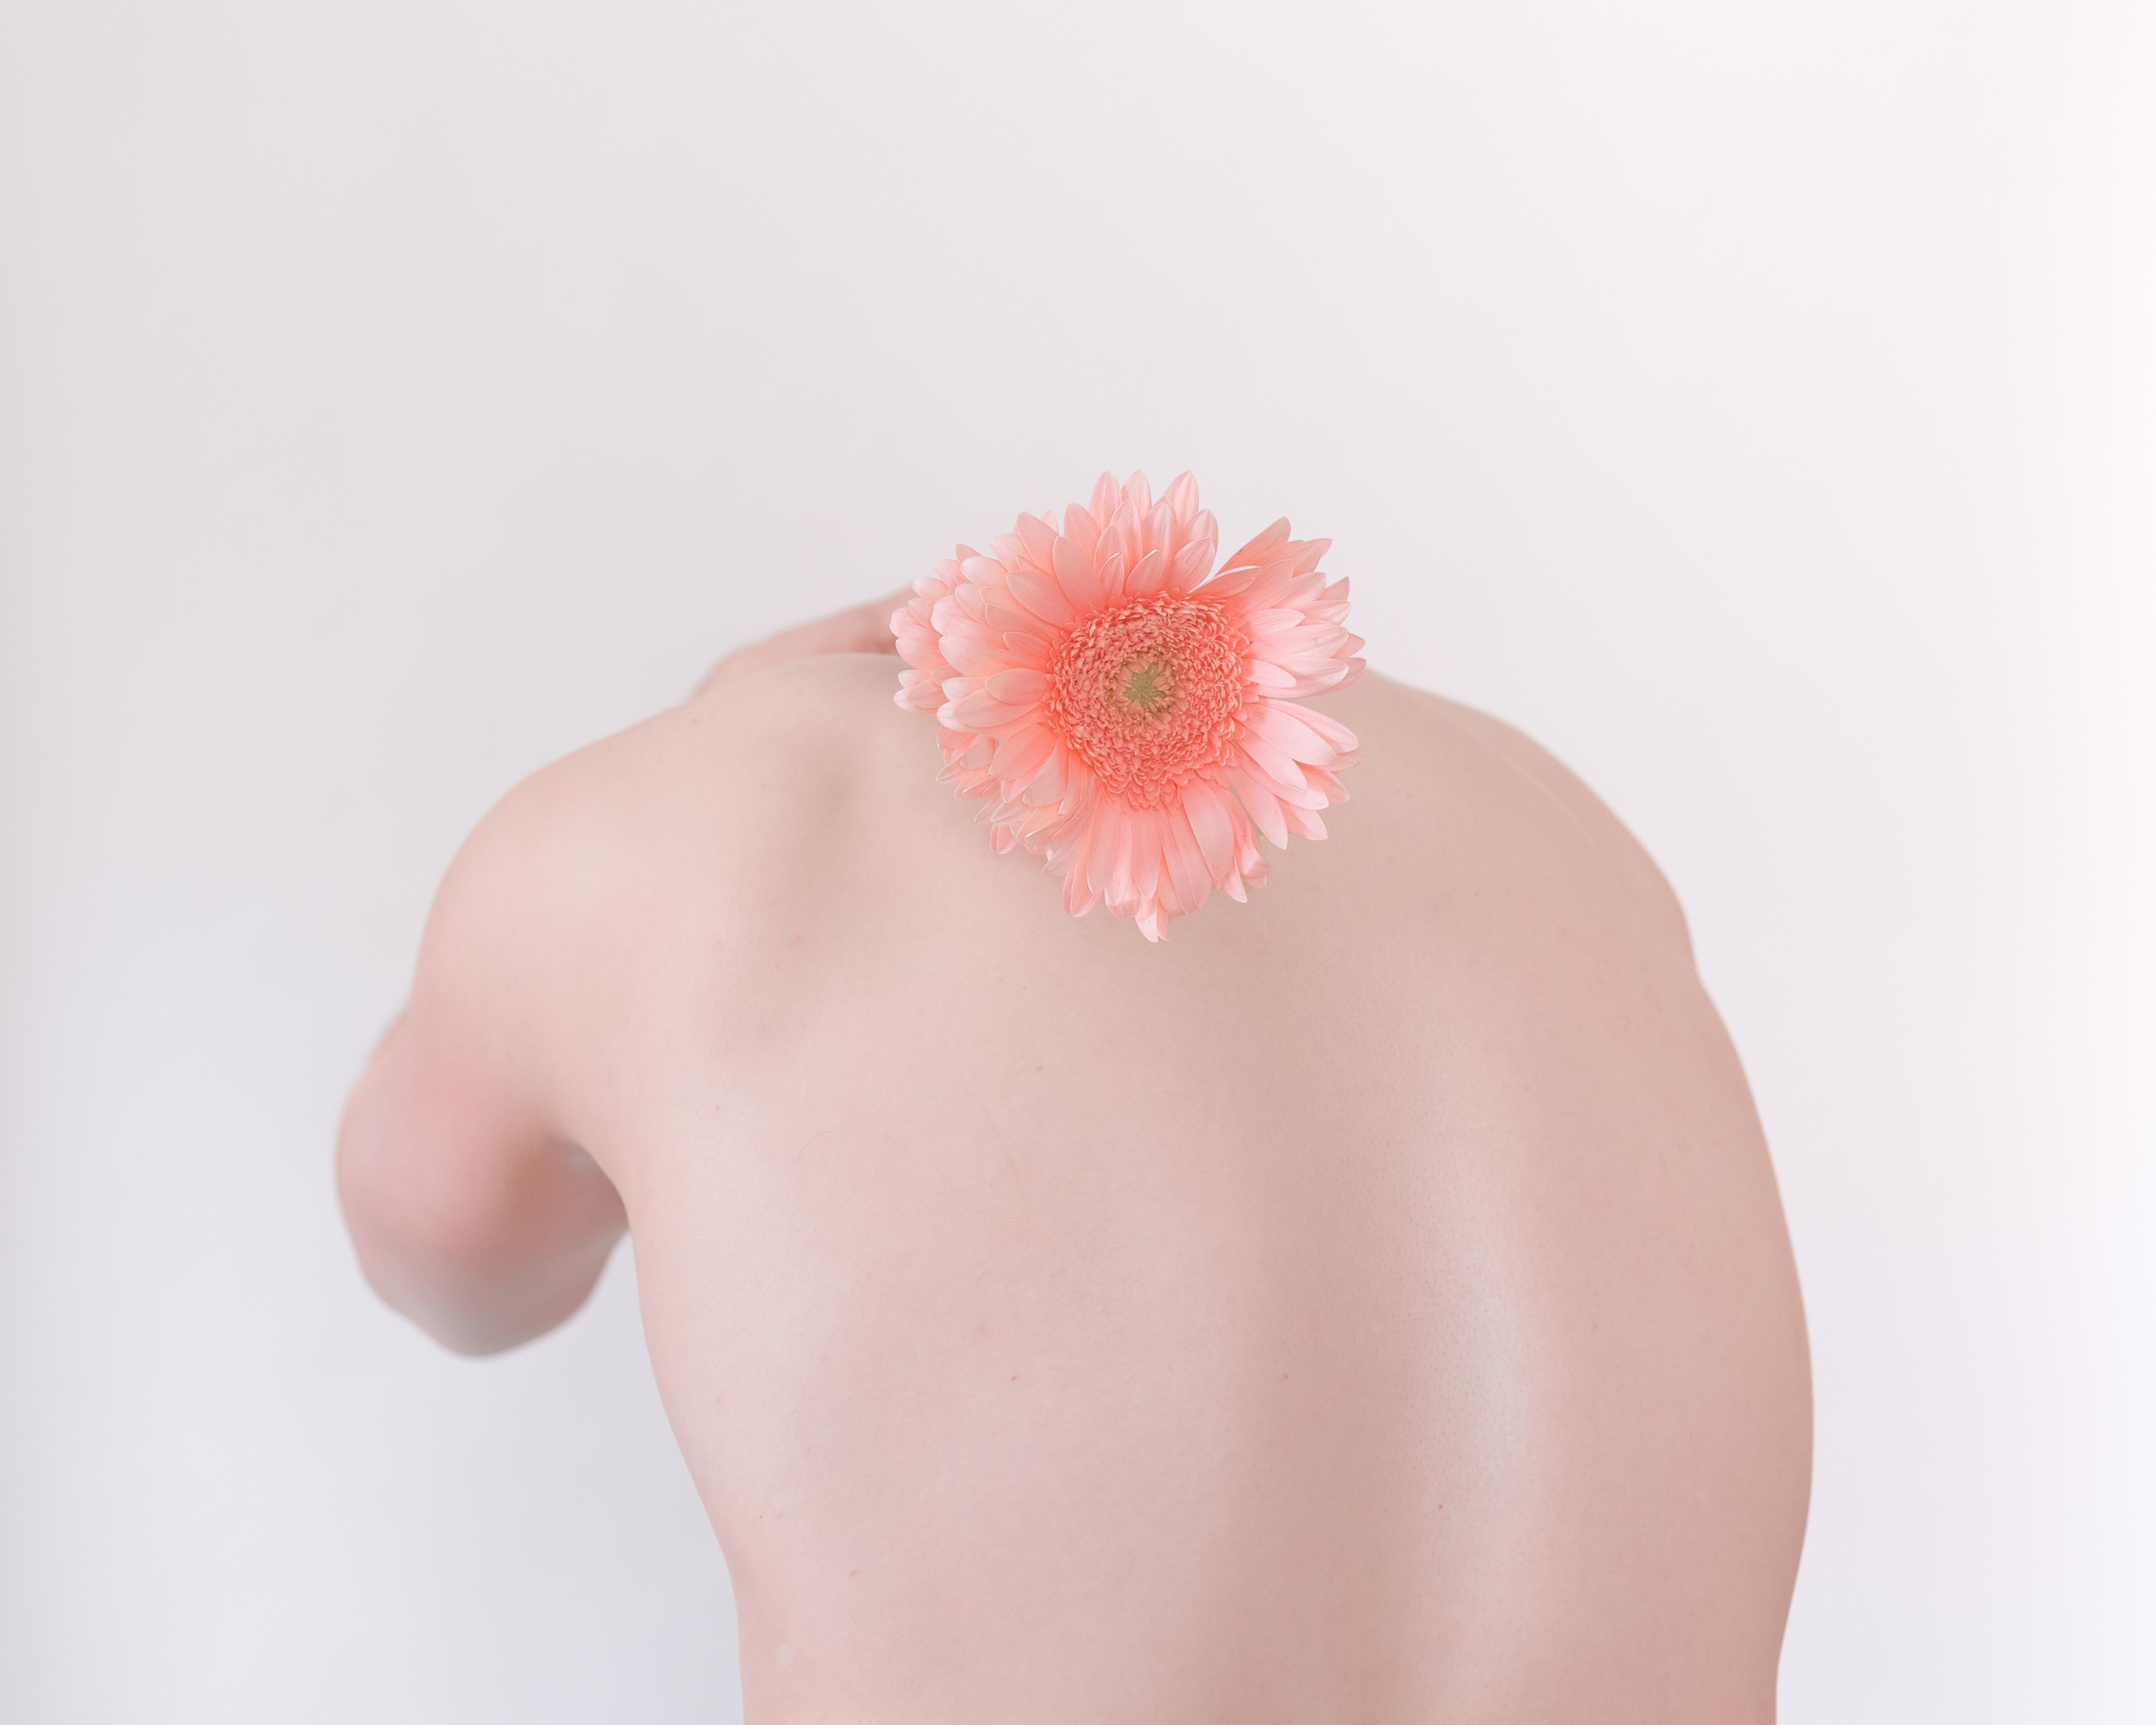 David Pugh Portrait Photograph - Skin and Flower (Male, Back, Flower, Pink, Rose, Soft, Portrait, Still Life)